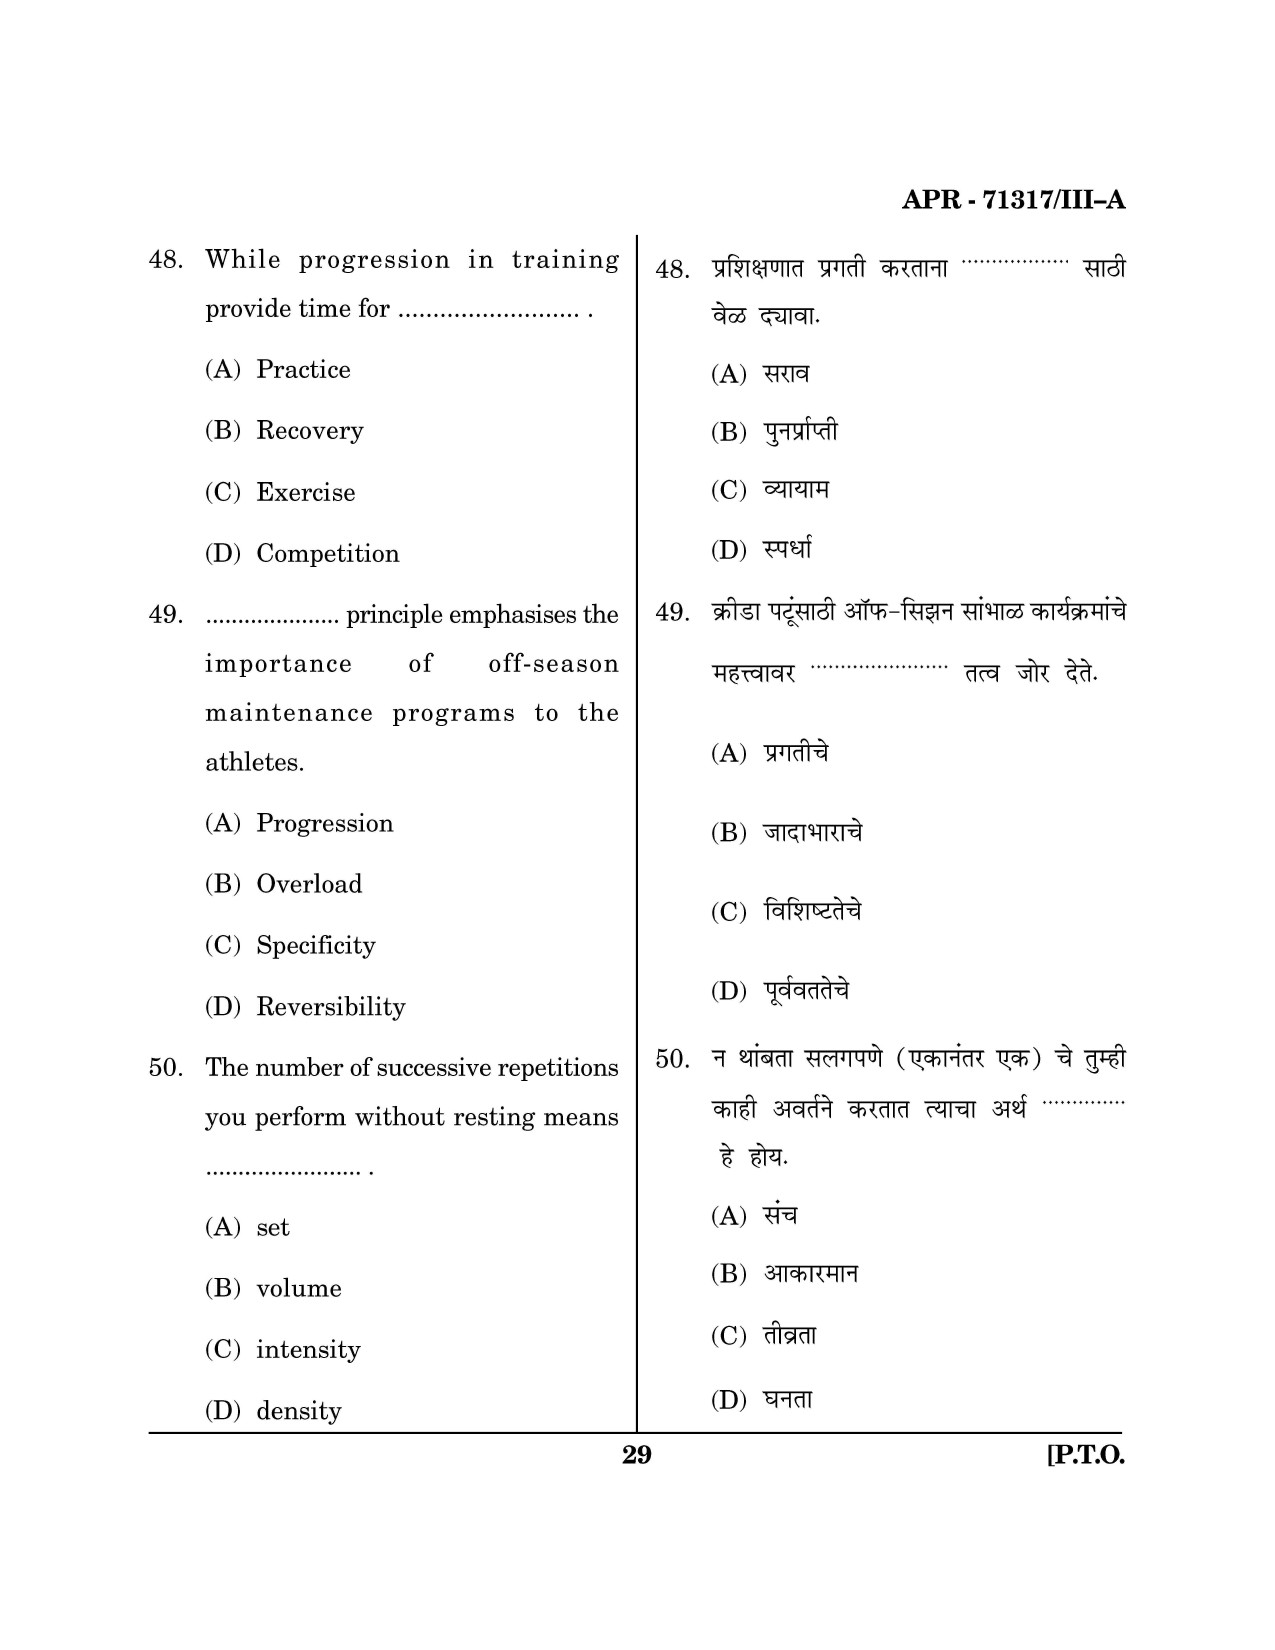 Maharashtra SET Physical Education Question Paper III April 2017 28